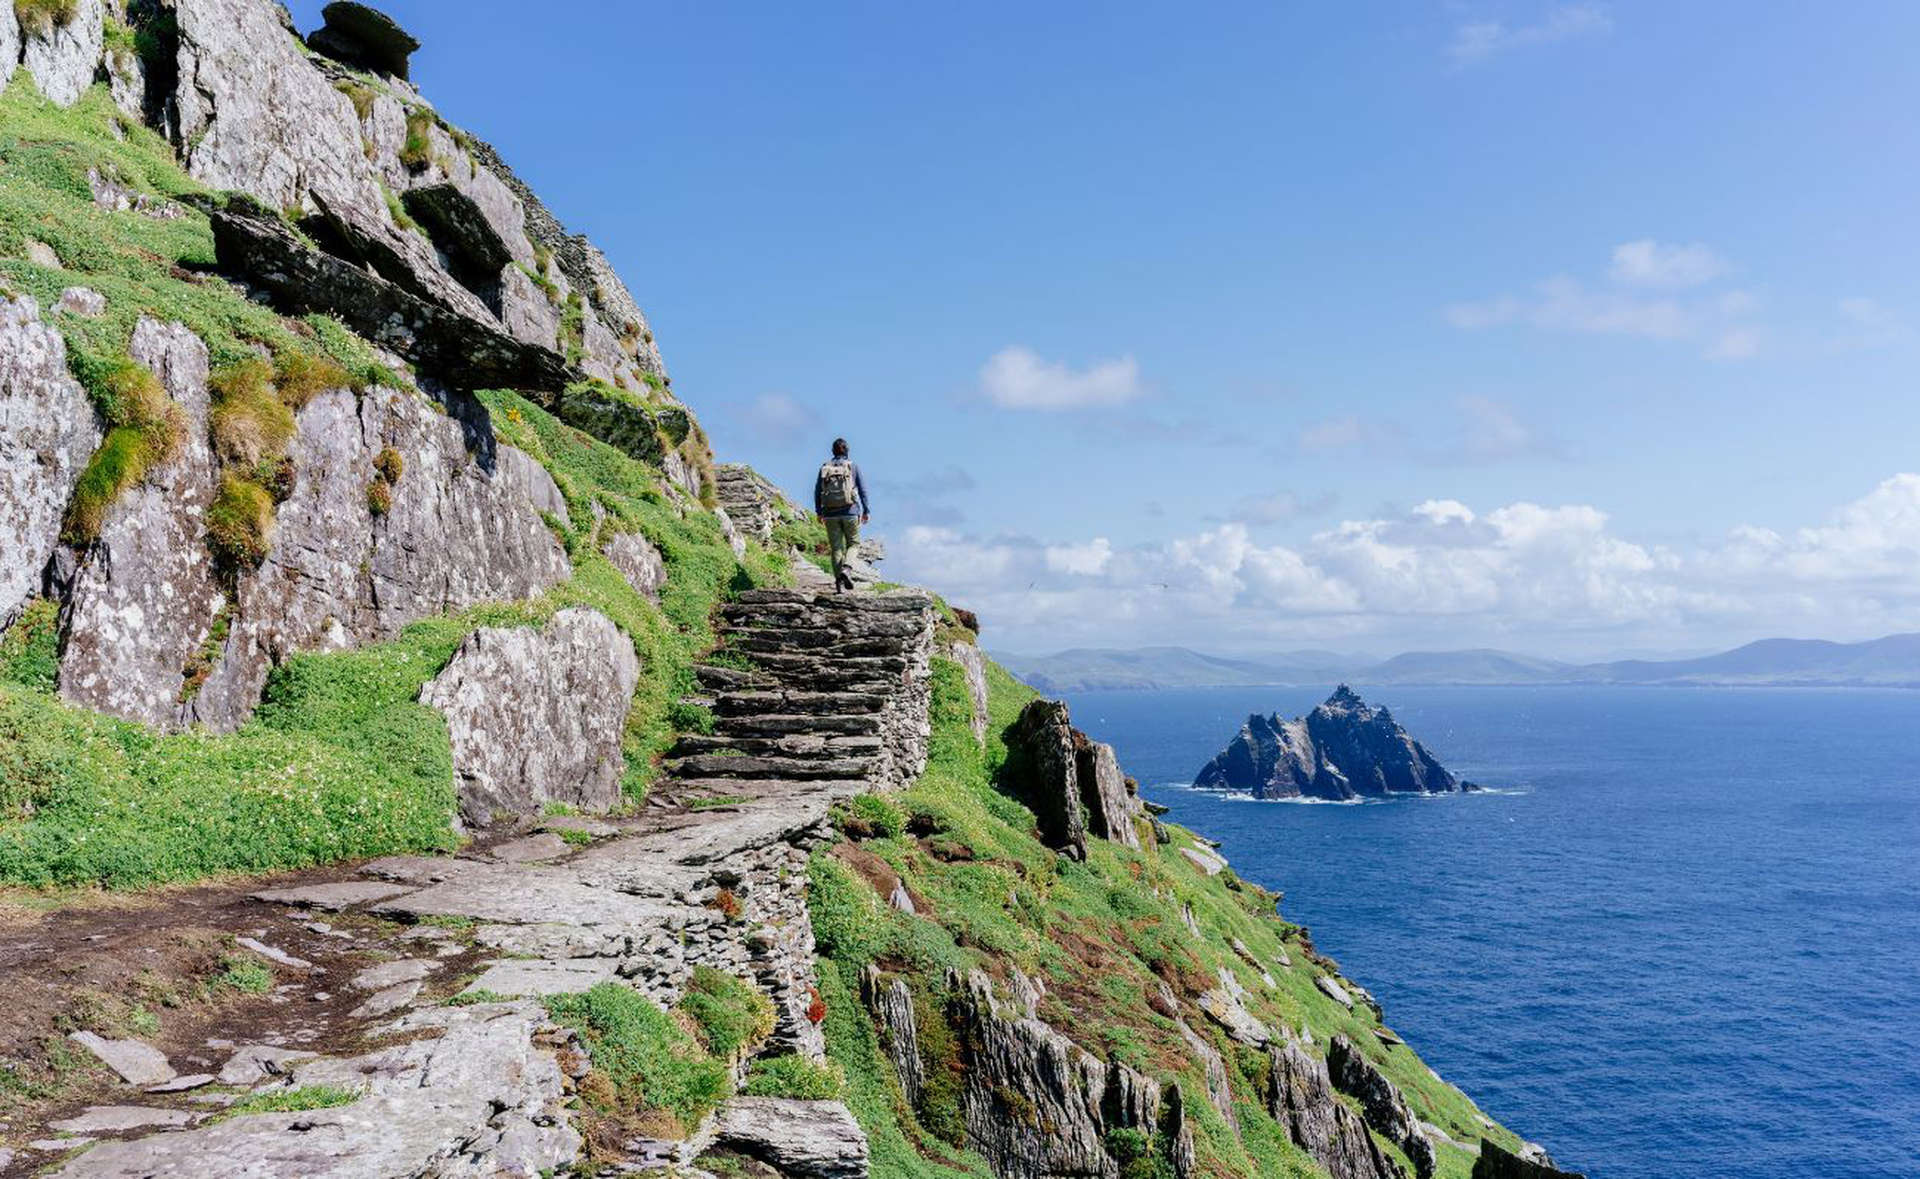 Skellig Michael, UNESCO site off Ireland's emerald coast